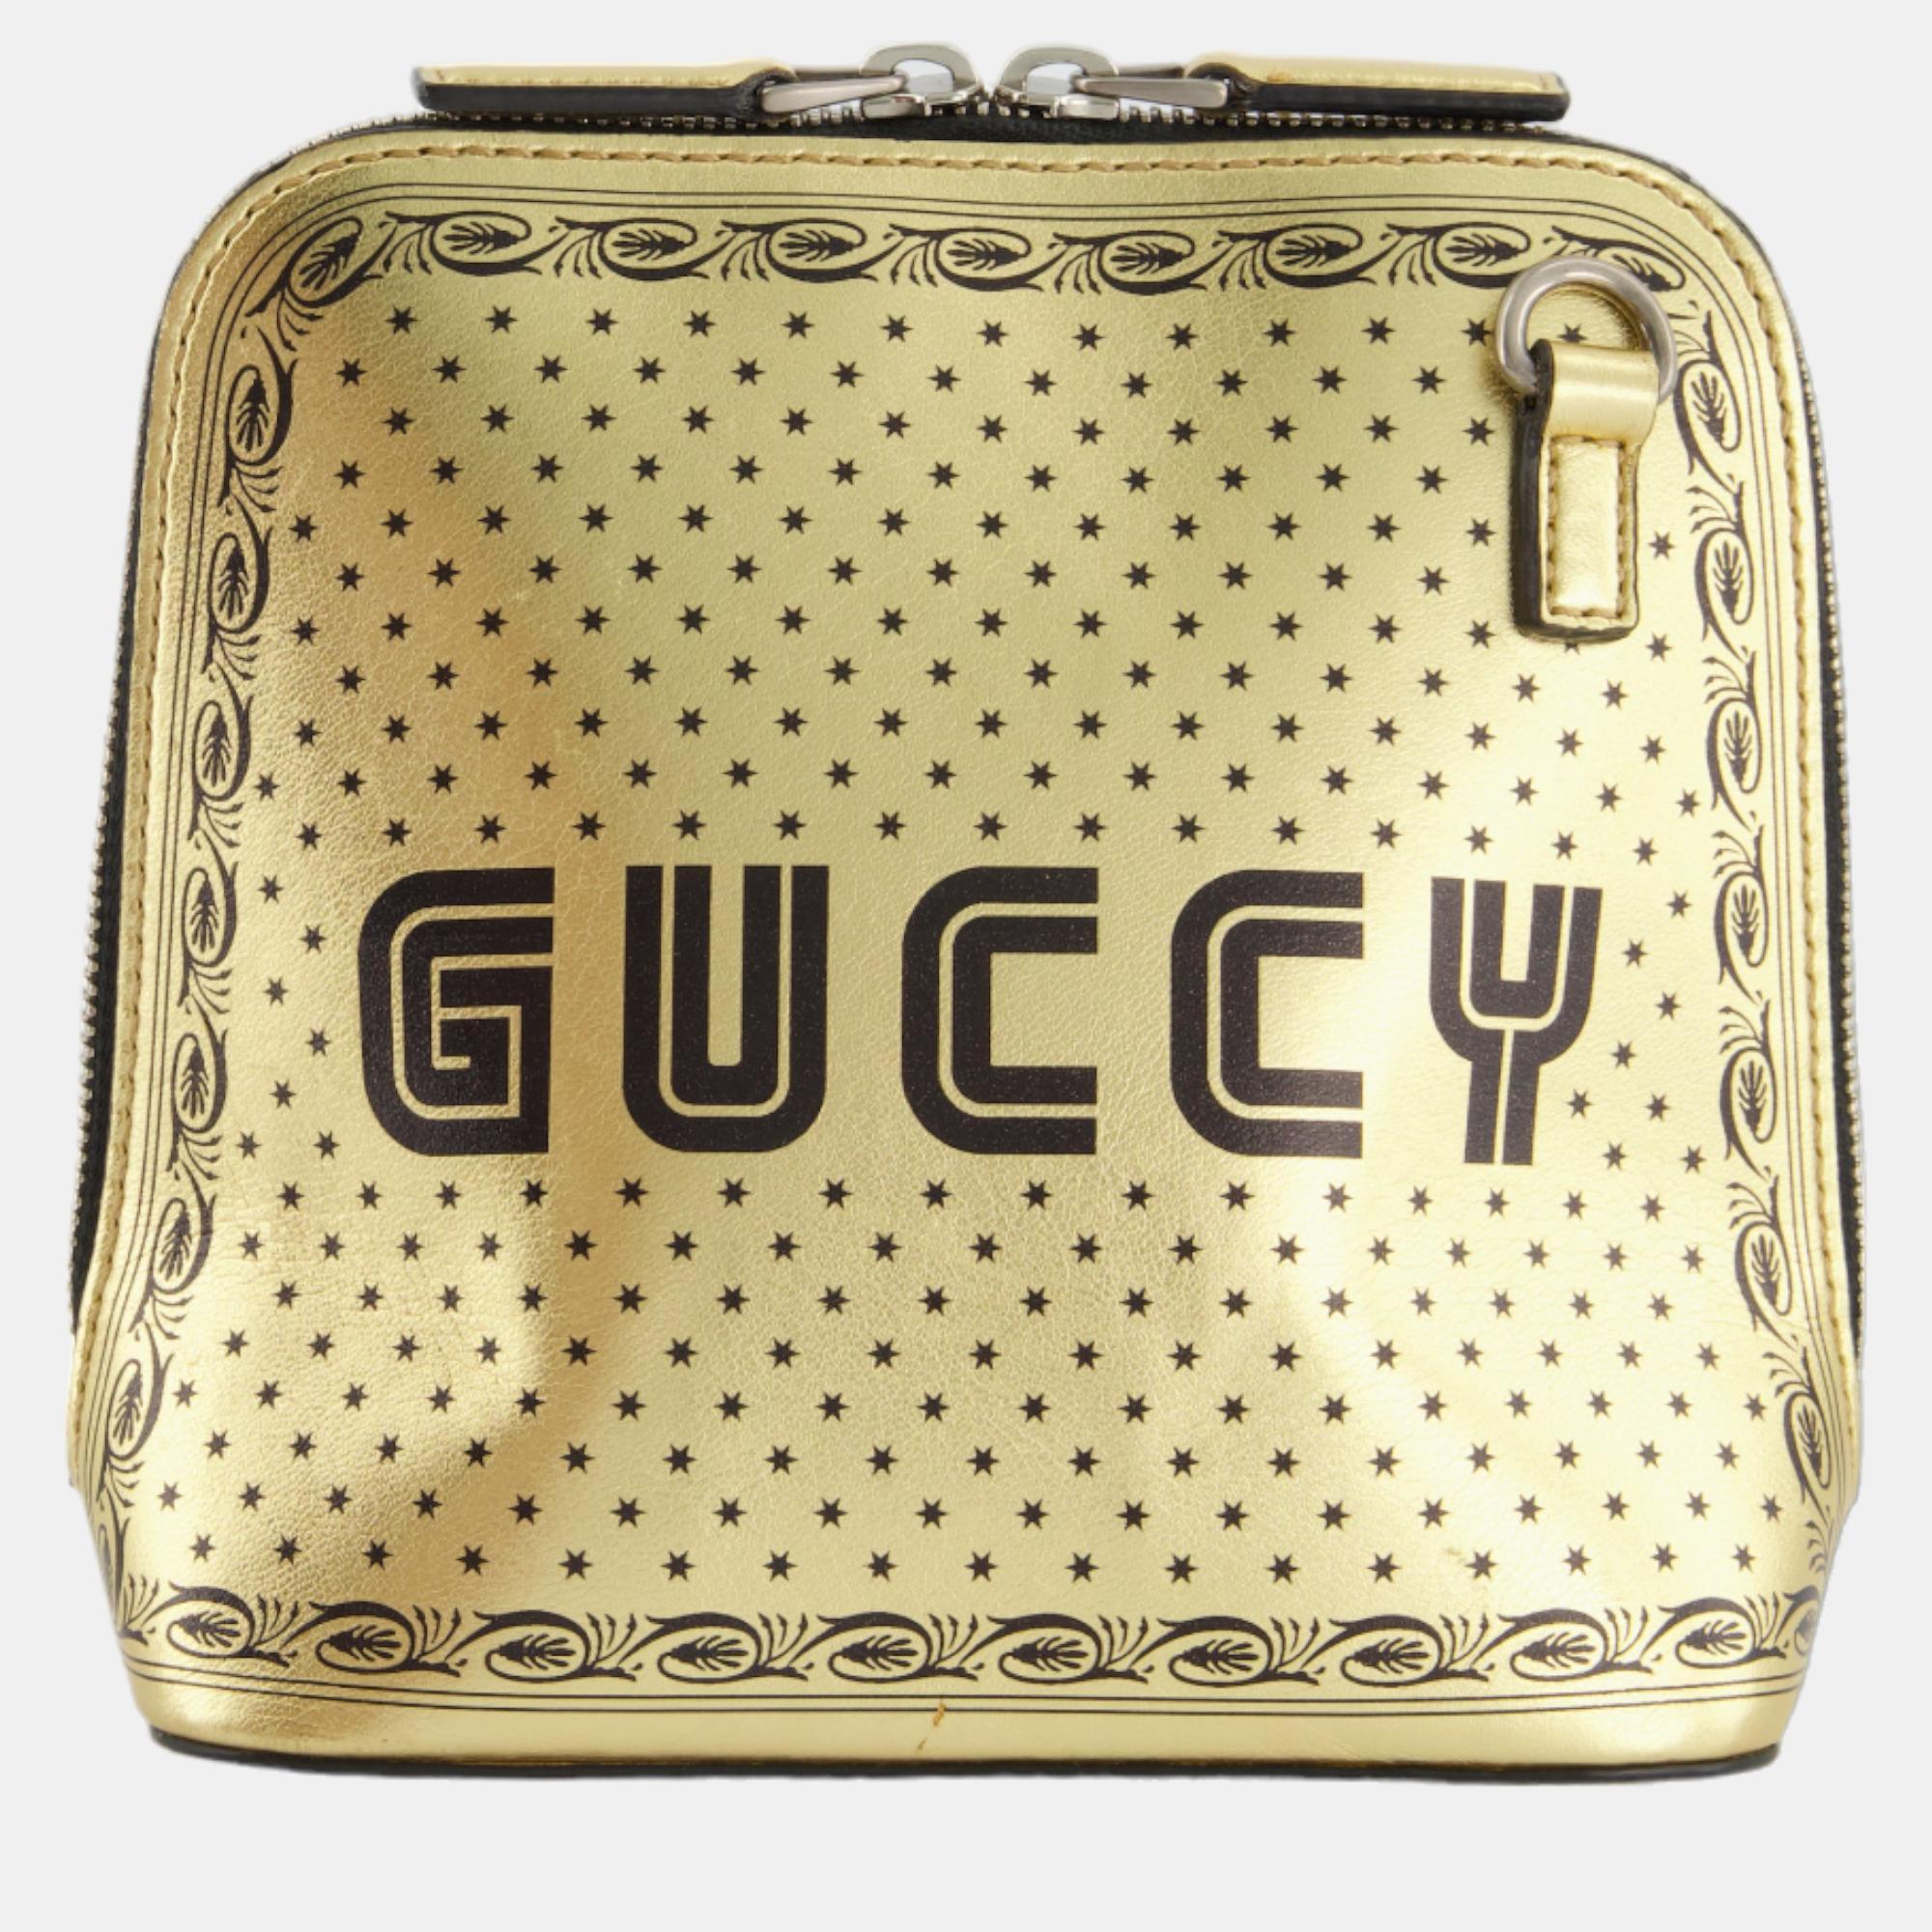 Gucci gold and black leather guccy mini dome sega bag